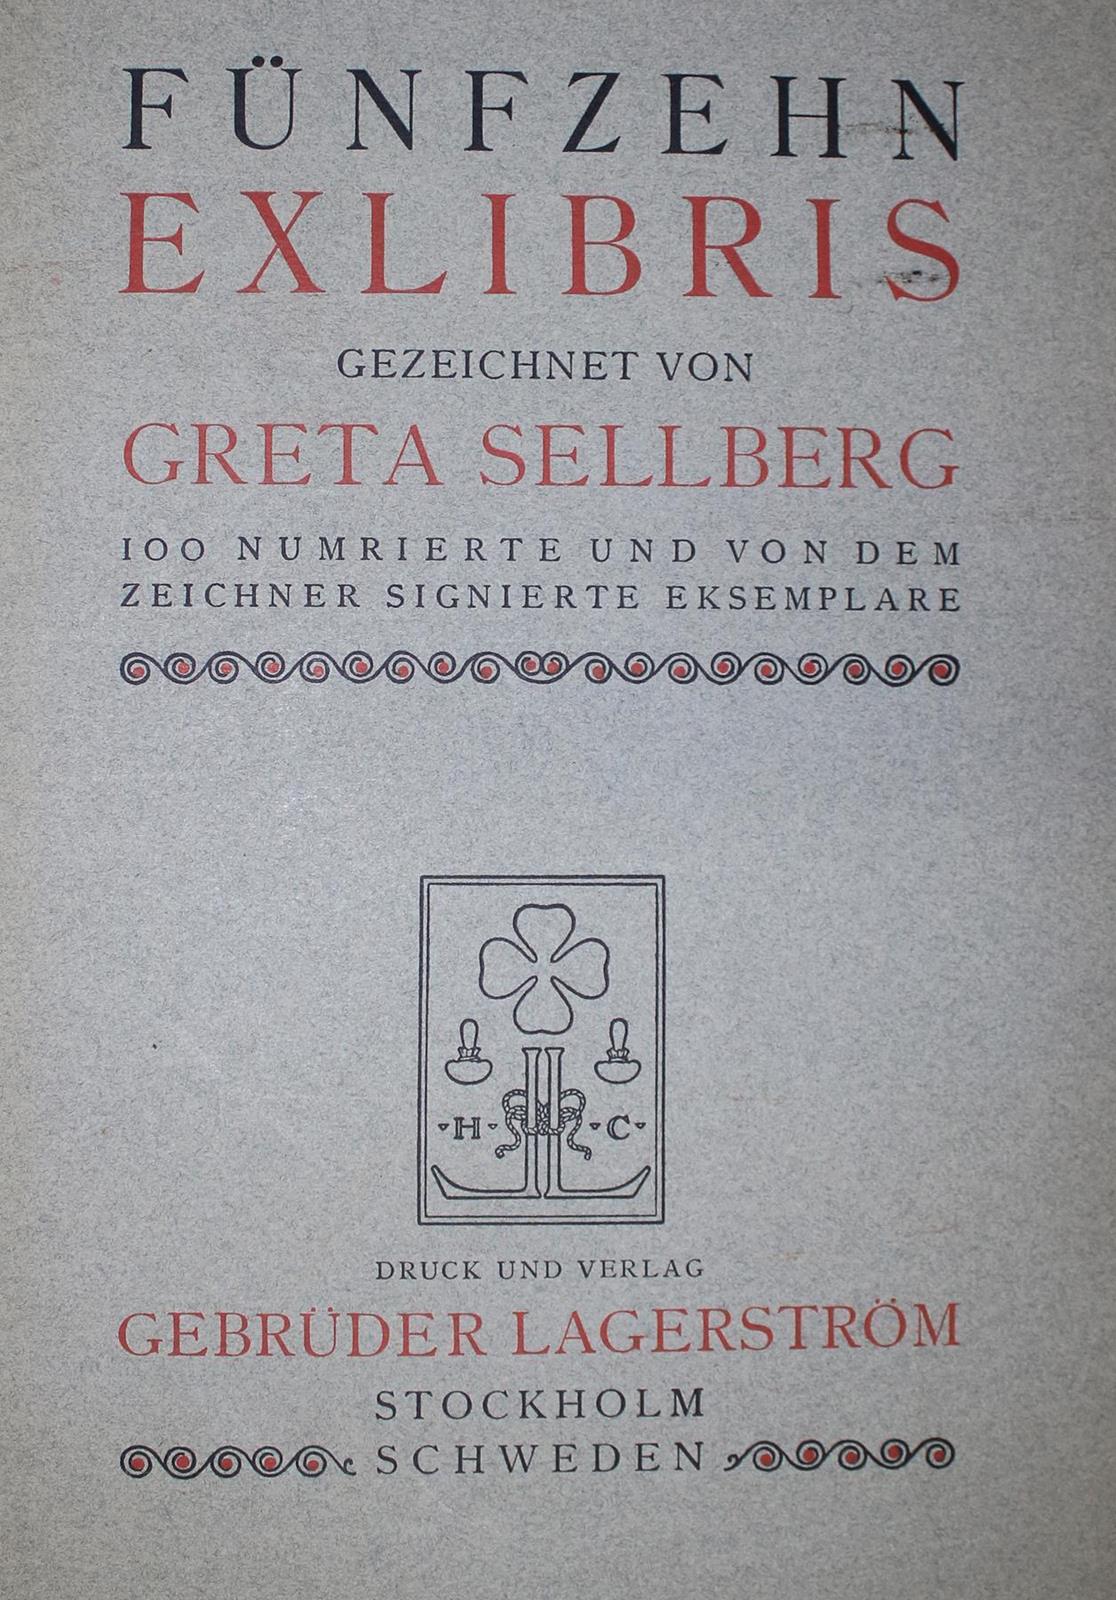 Sellberg,G. | Bild Nr.2